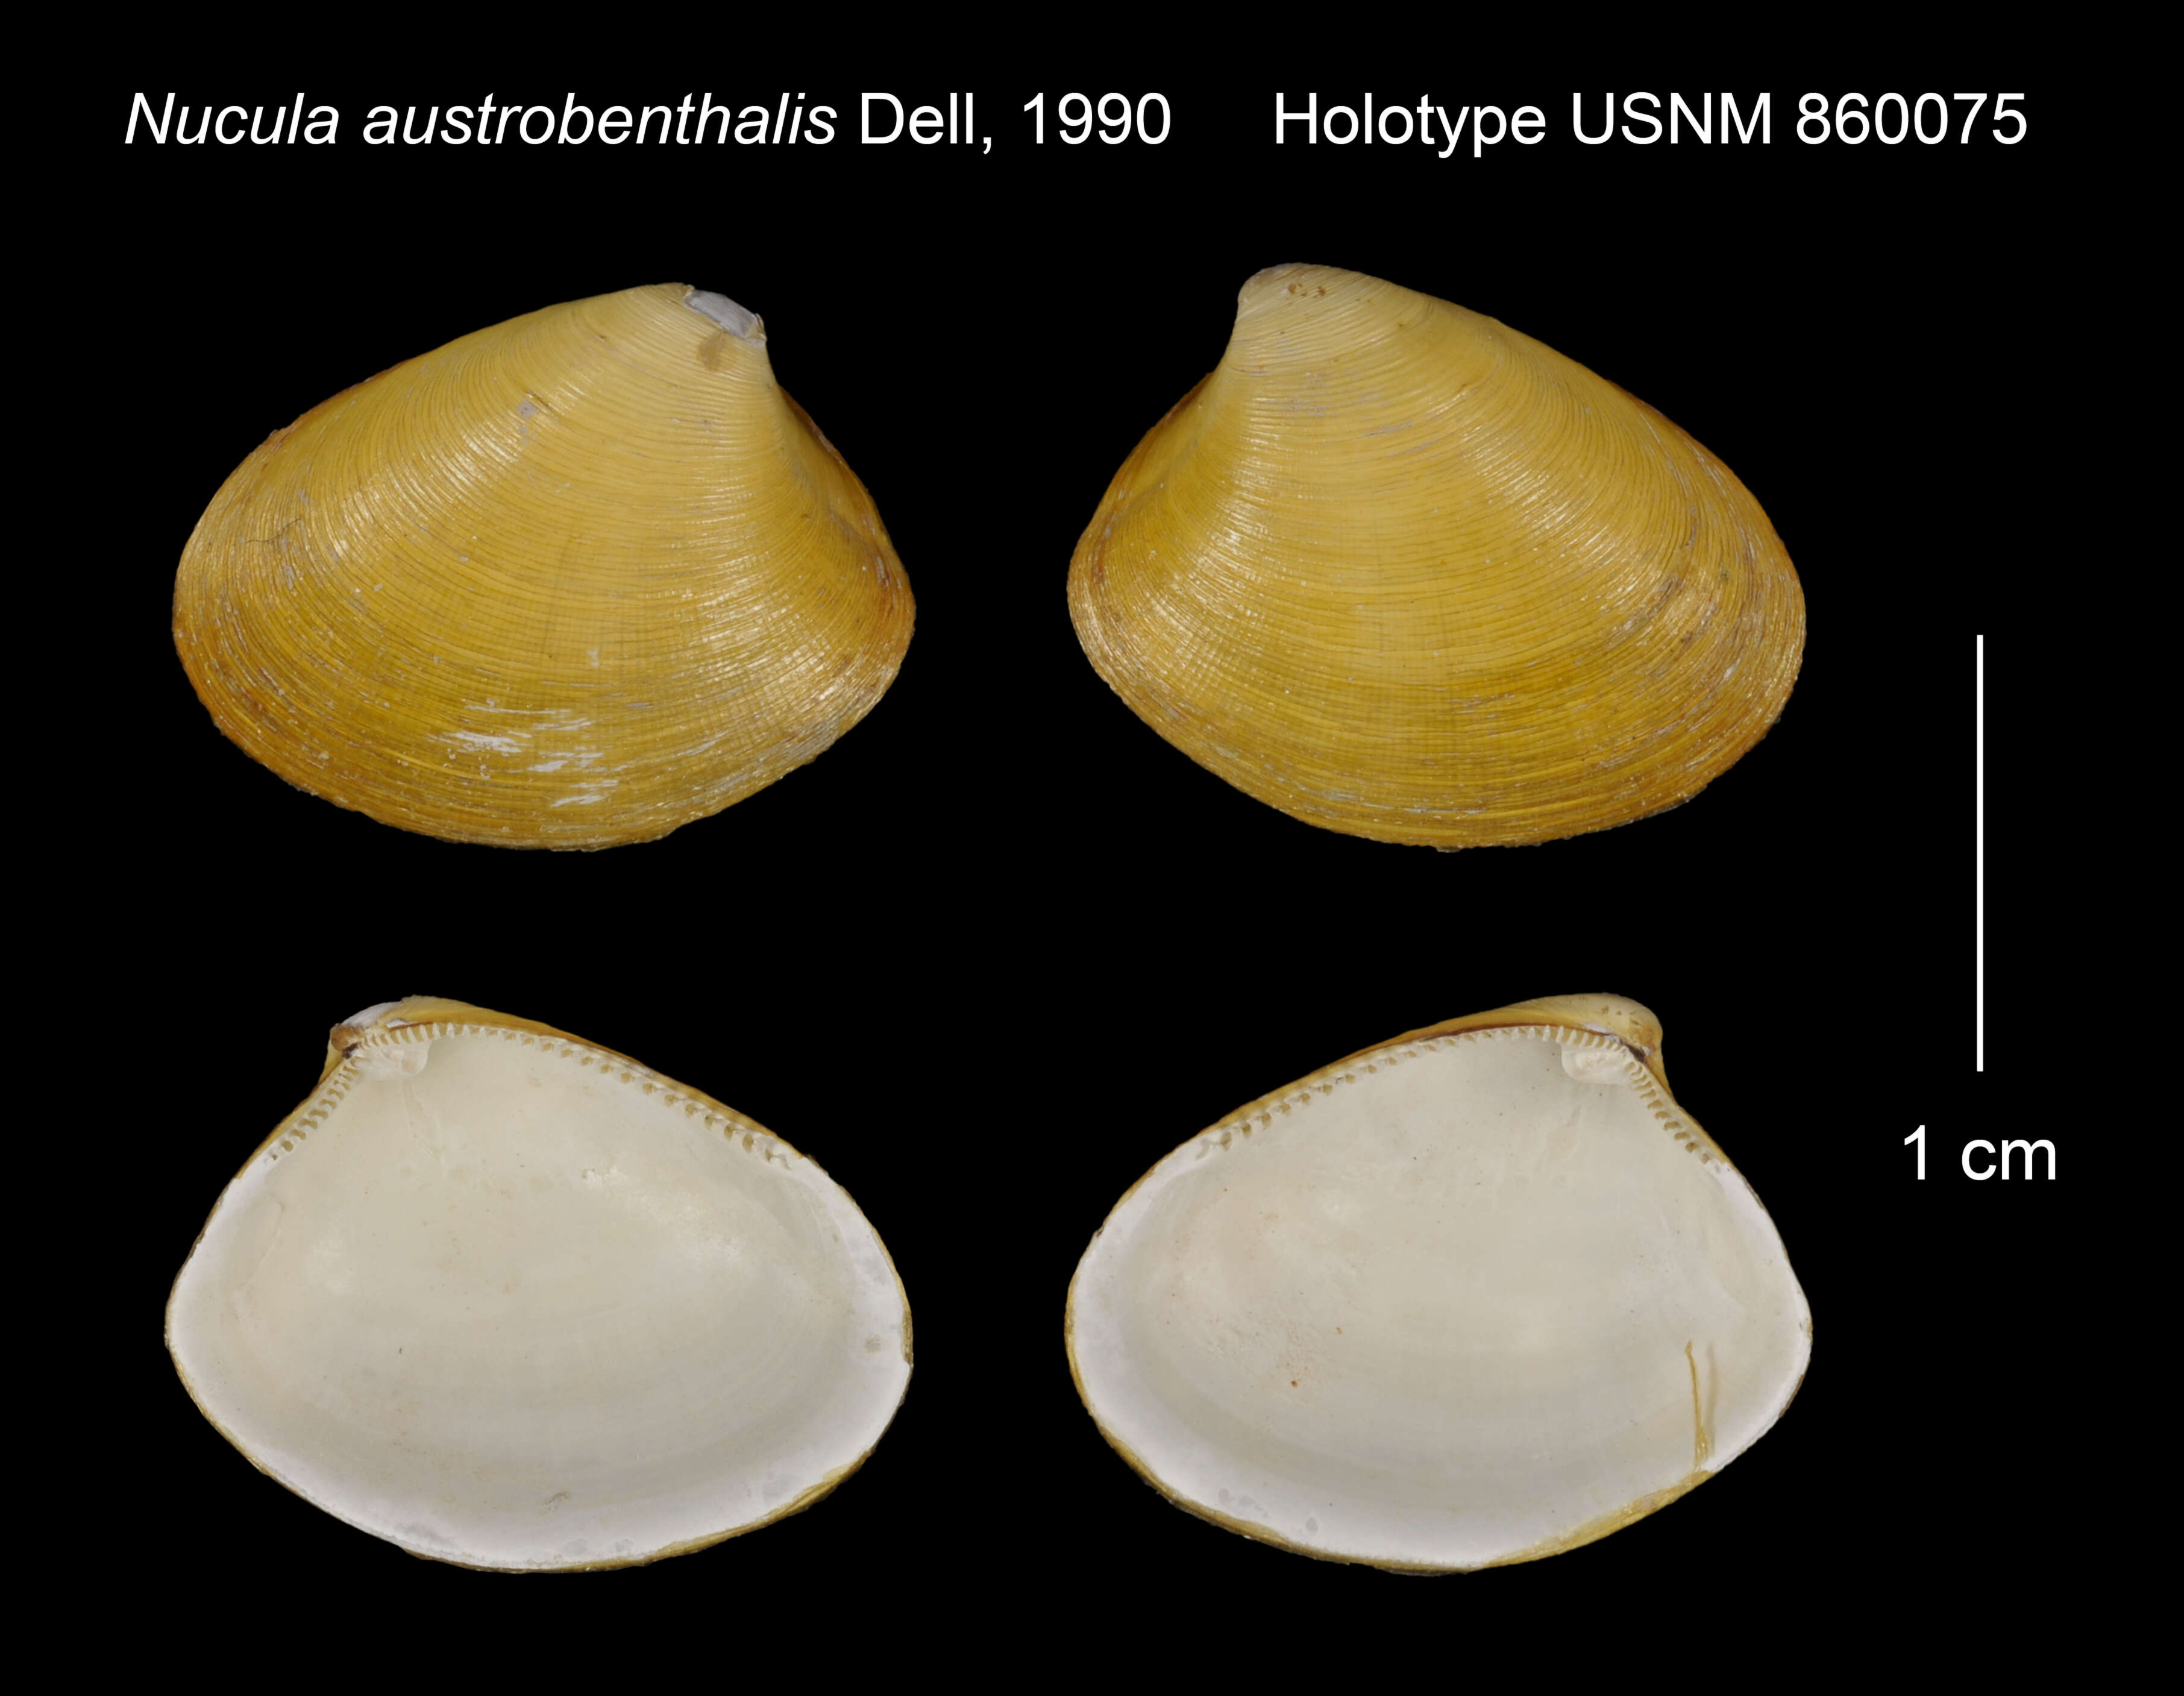 Image of Nucula austrobenthalis Dell 1990